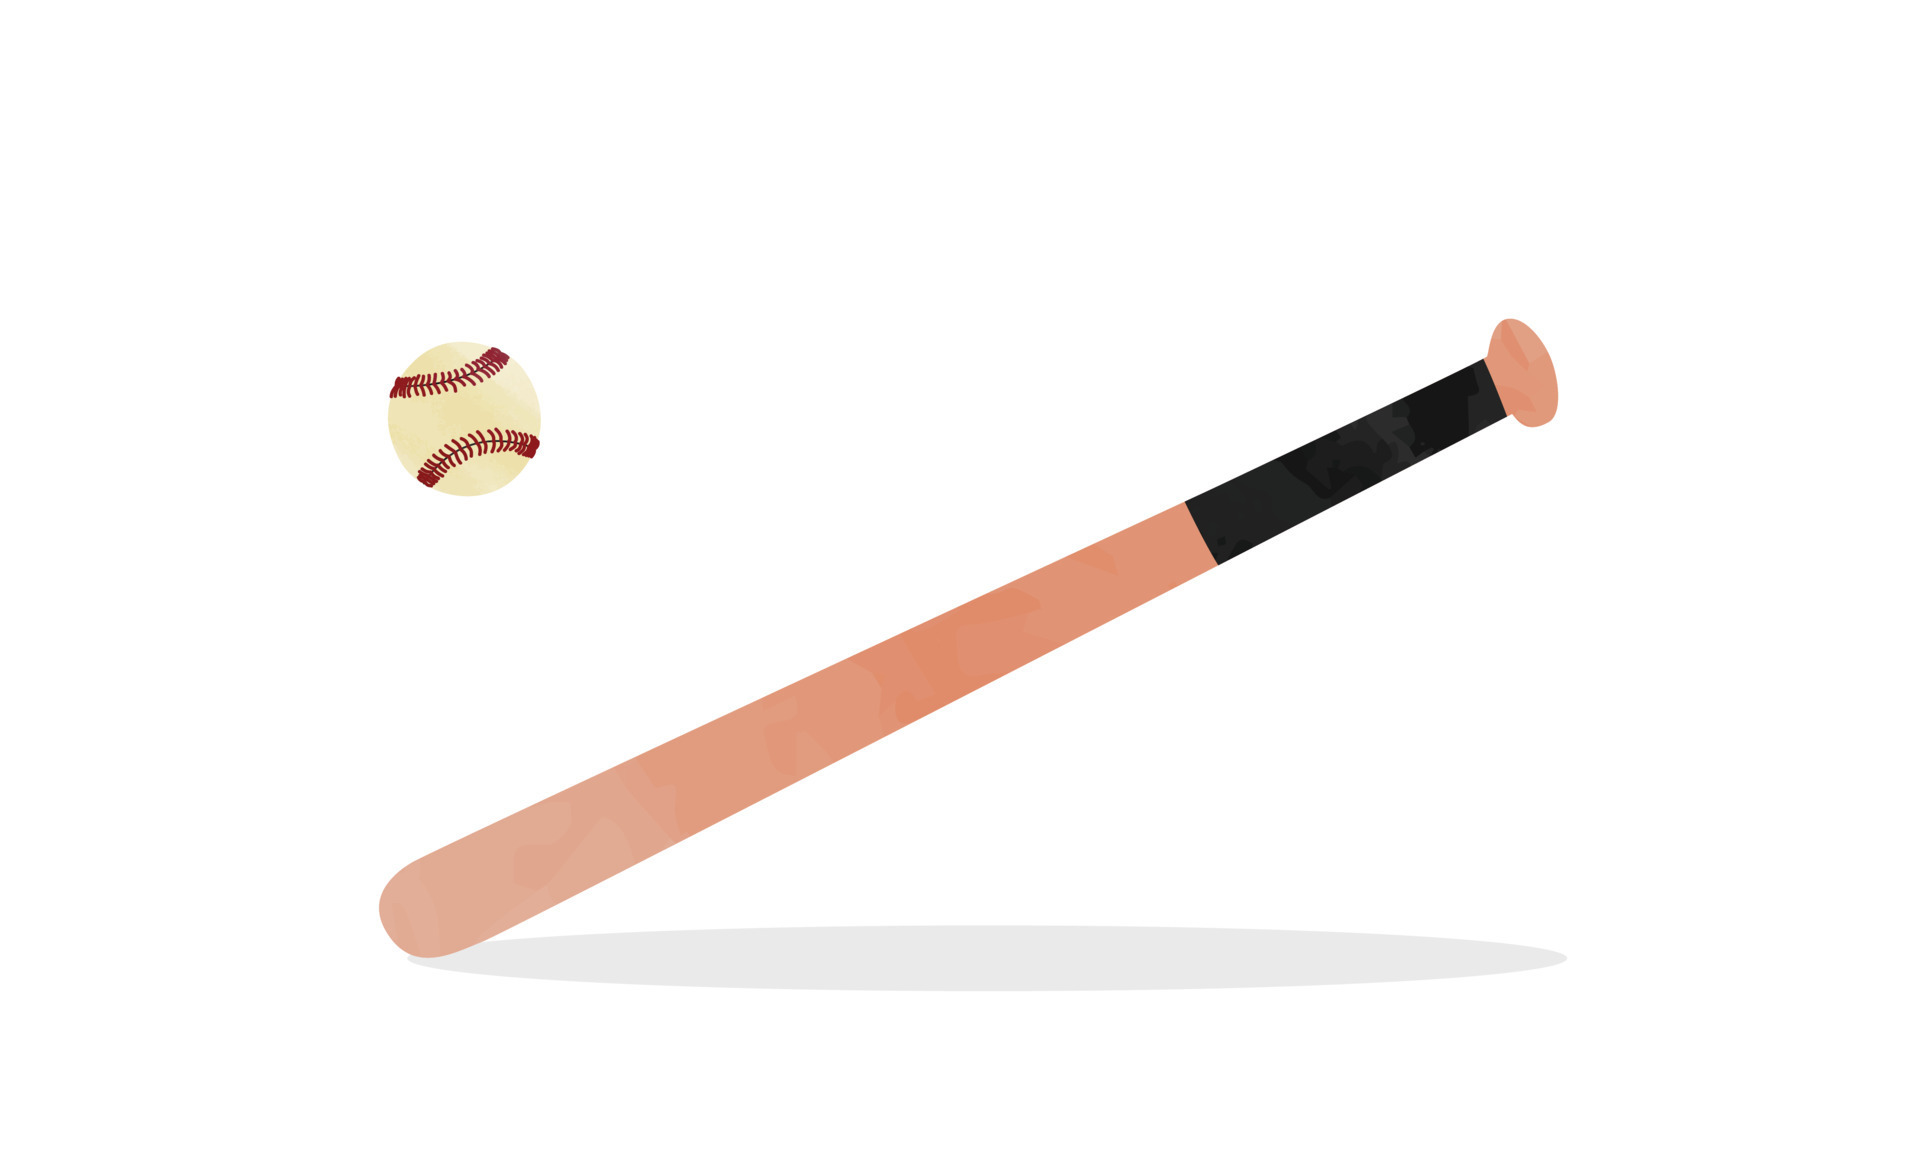 Baseball bat clipart. Simple wooden baseball bat watercolor style vector  illustration isolated on white background. Wooden baseball bat cartoon hand  drawn style. Baseball stick vector design 11064906 Vector Art at Vecteezy